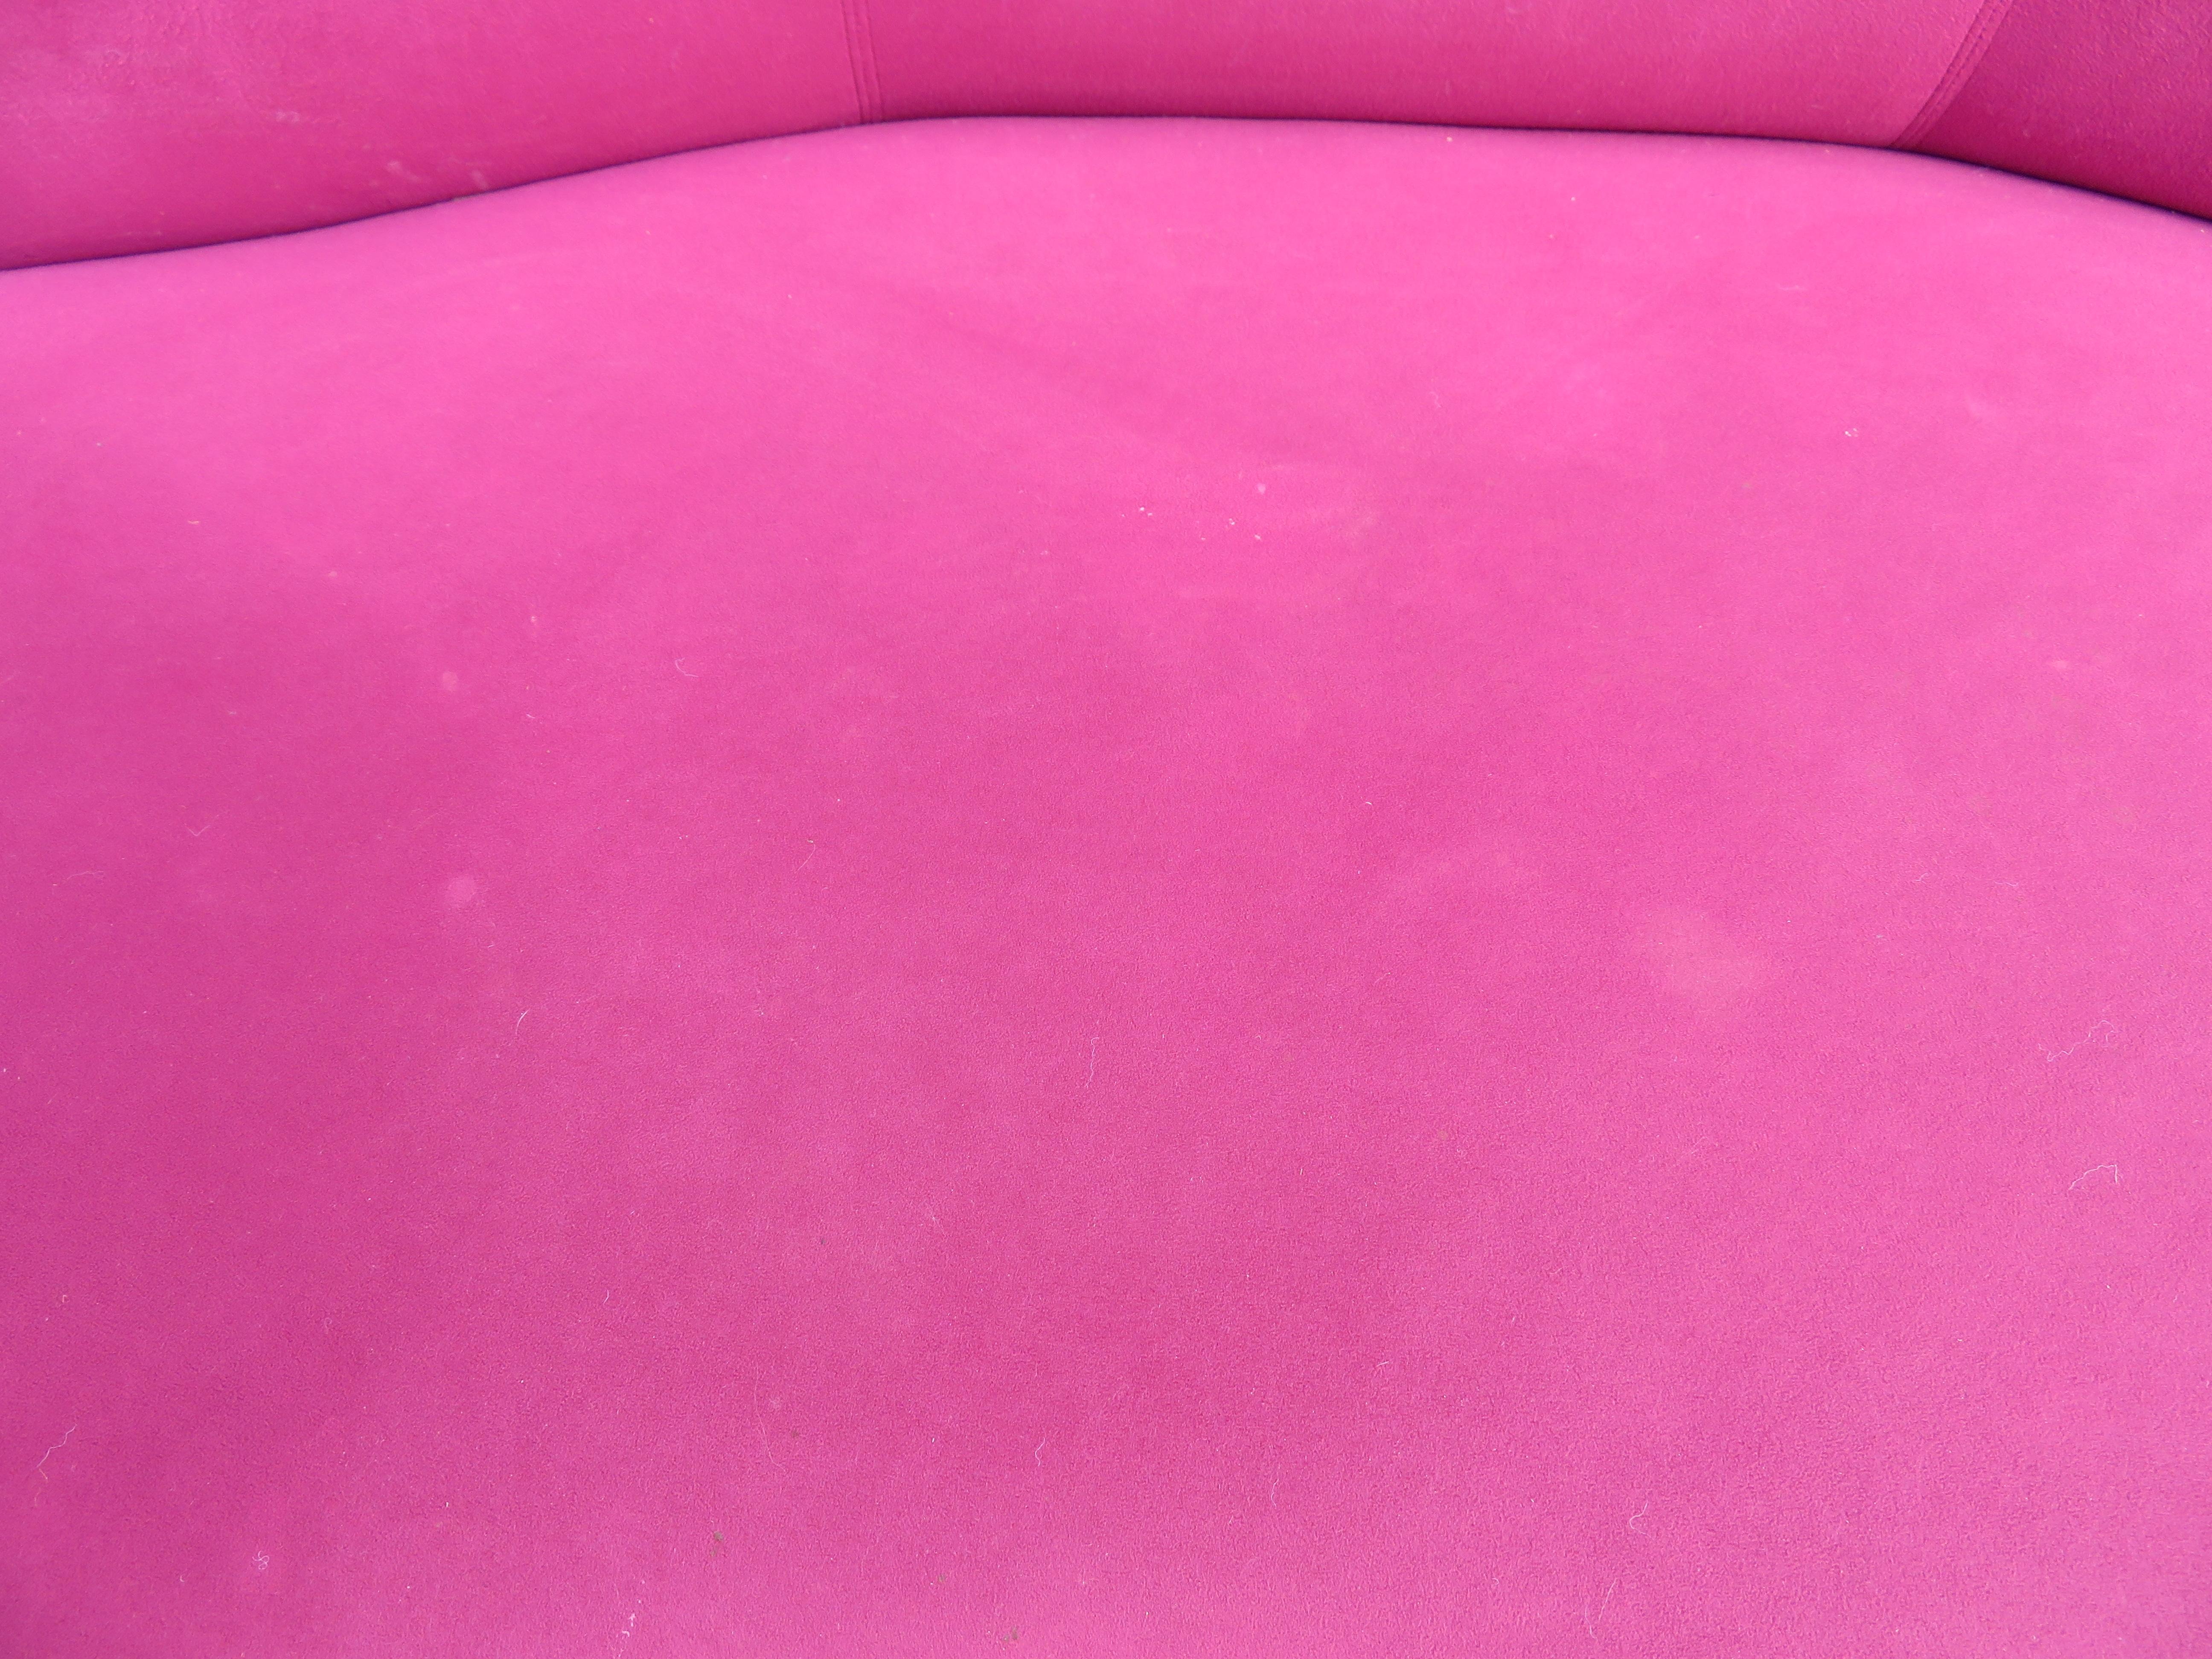 Gorgeous Vladimir Kagan Curved Cloud Sofa for Directional, Mid-Century Modern 9